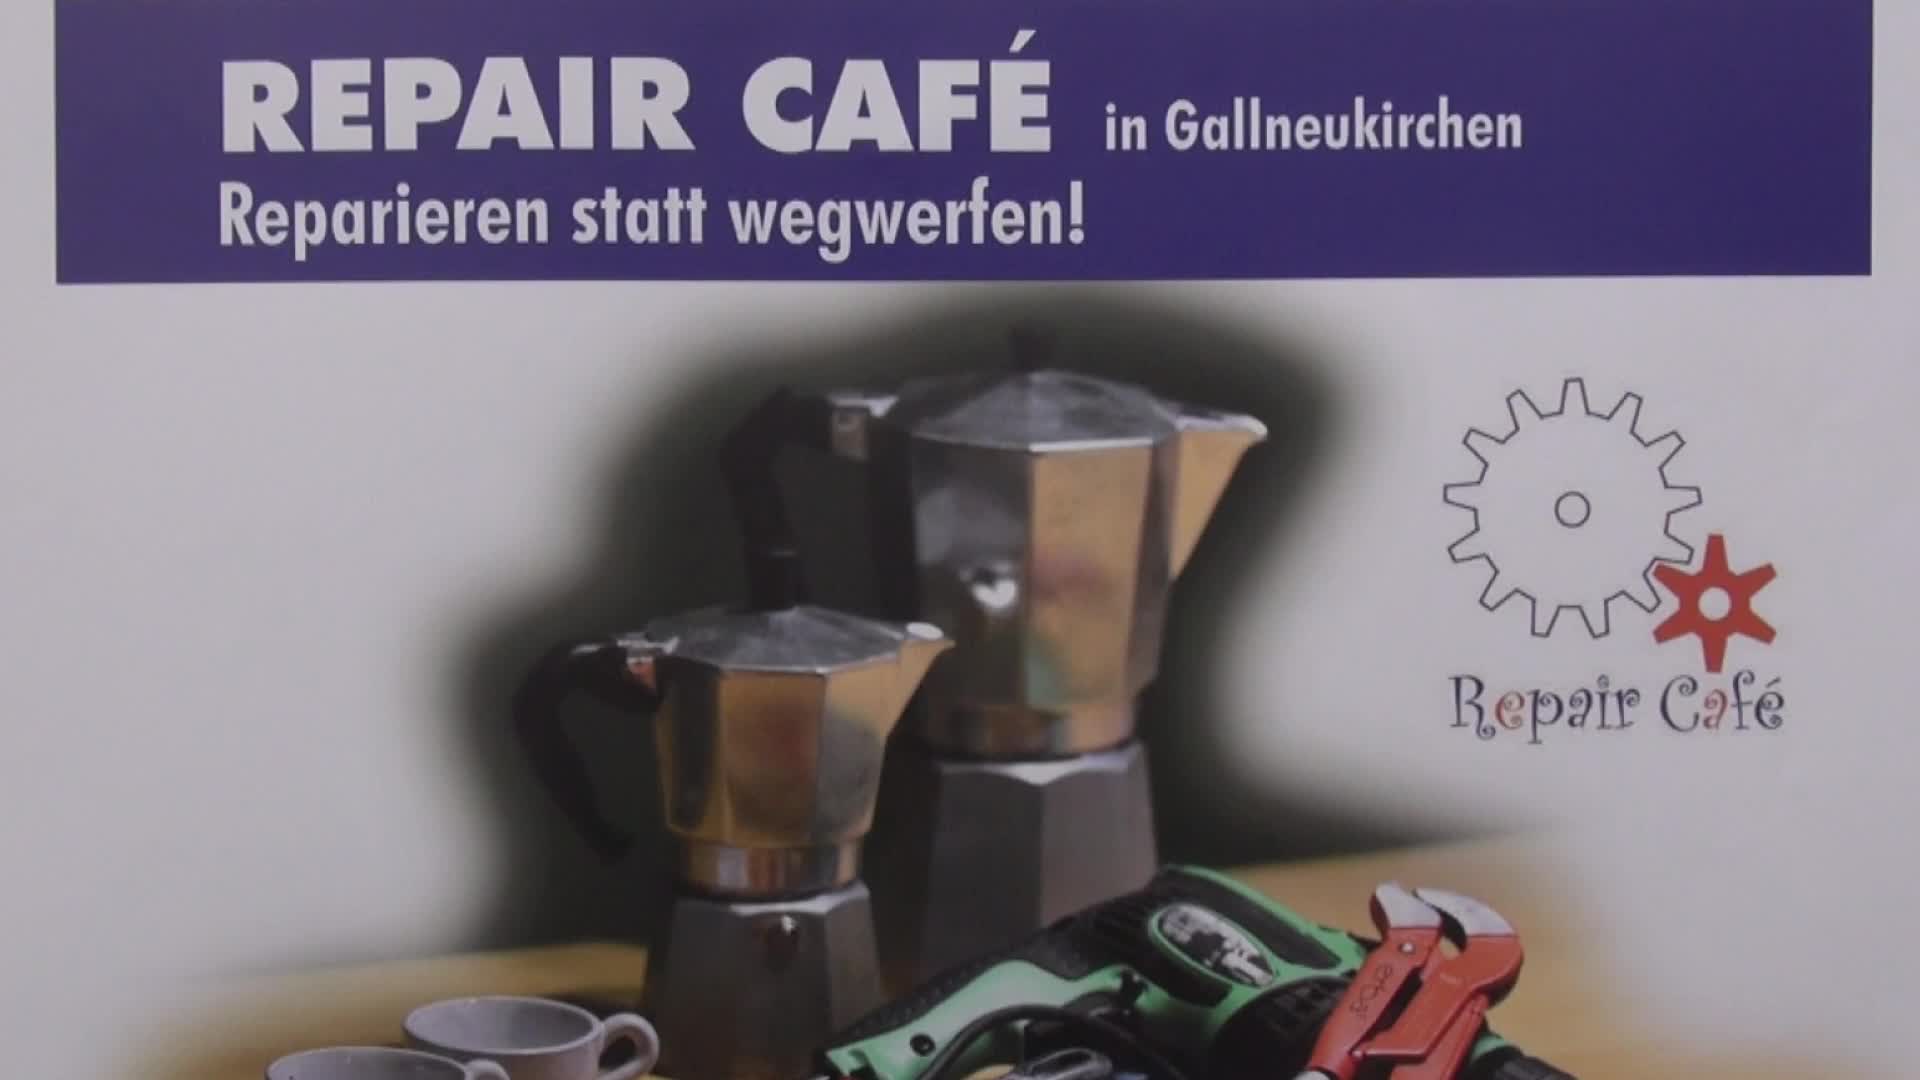 Repair Cafe in Gallneukirchen